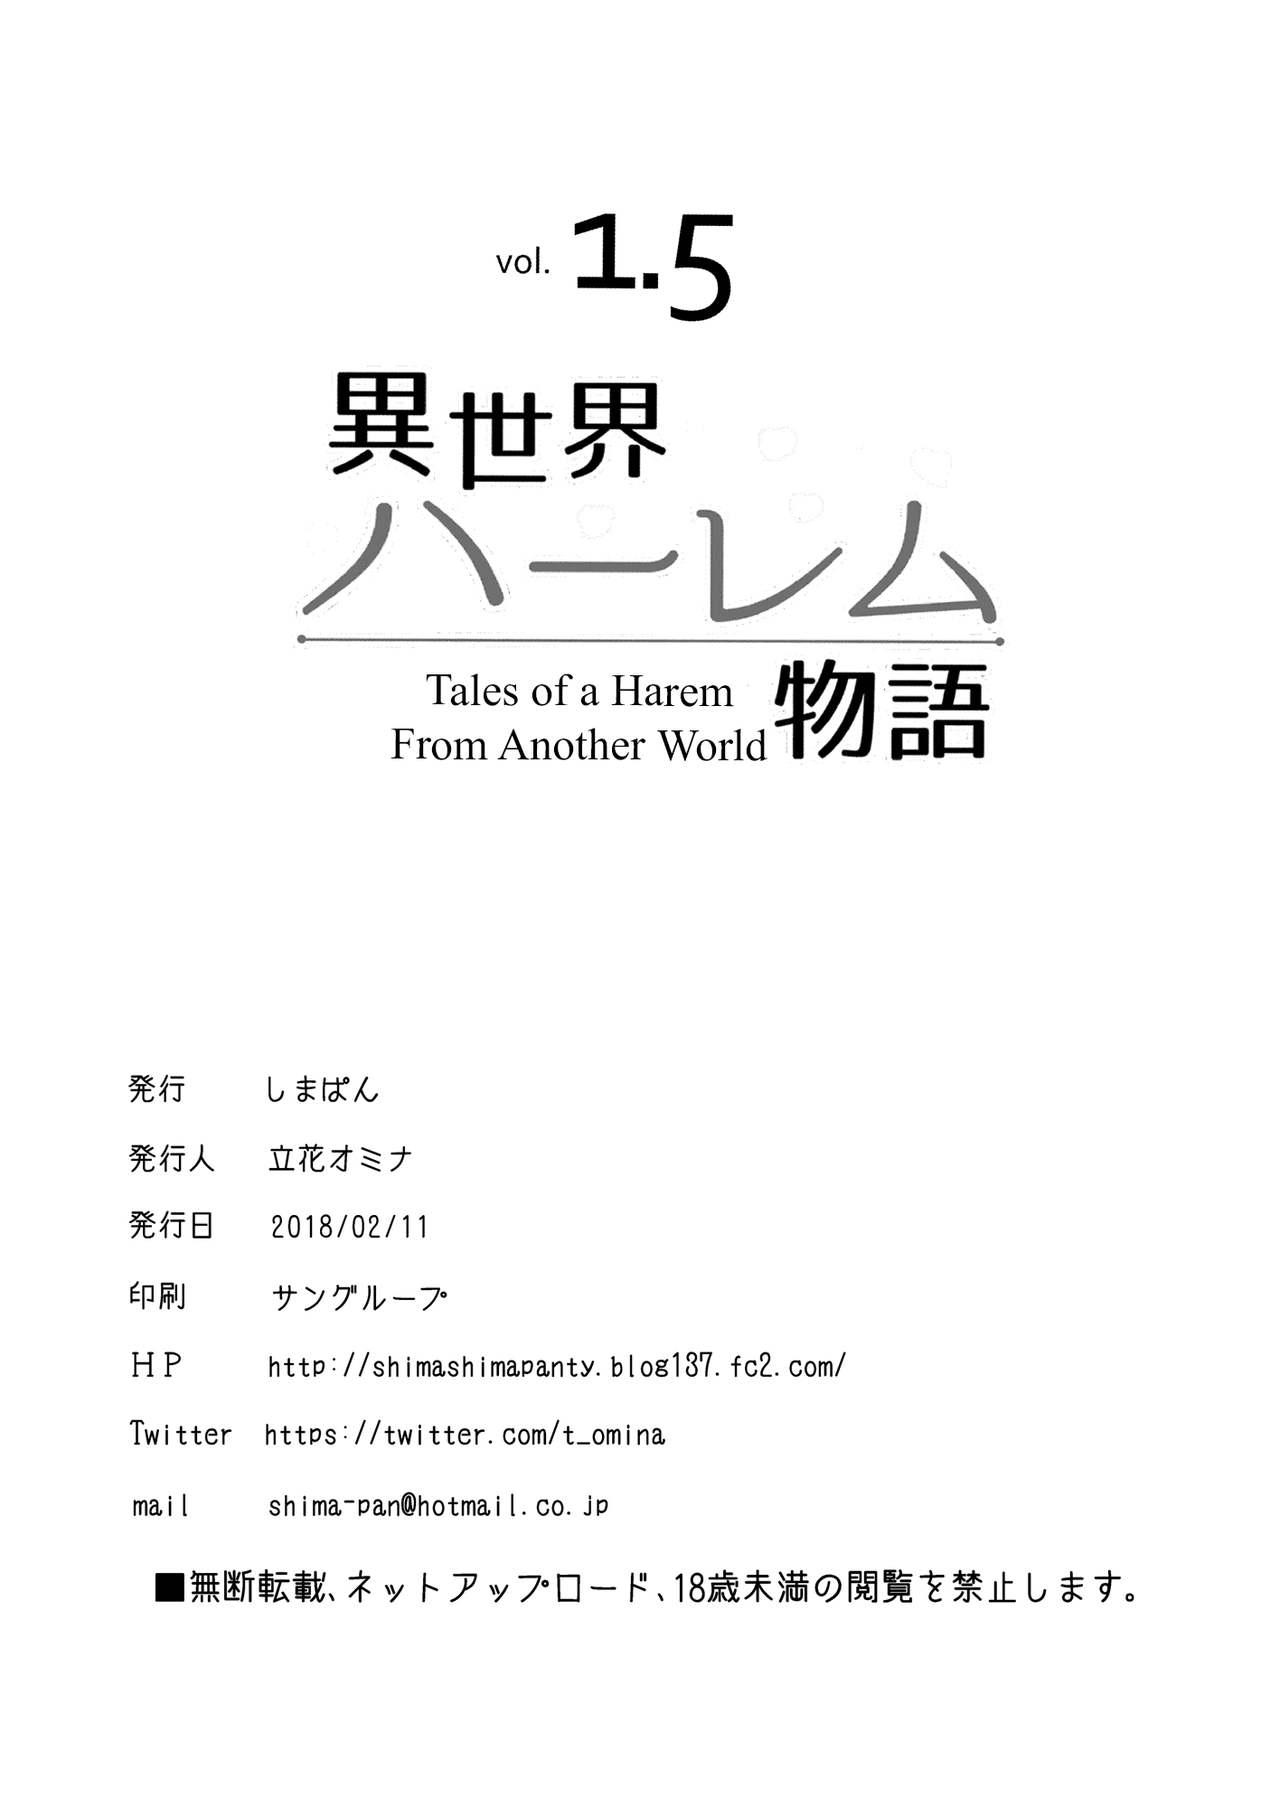 Isekai Harem Monogatari - Tales of Harem Vol. 1.5 | Tales of a Harem from Another World Vol. 1.5 8